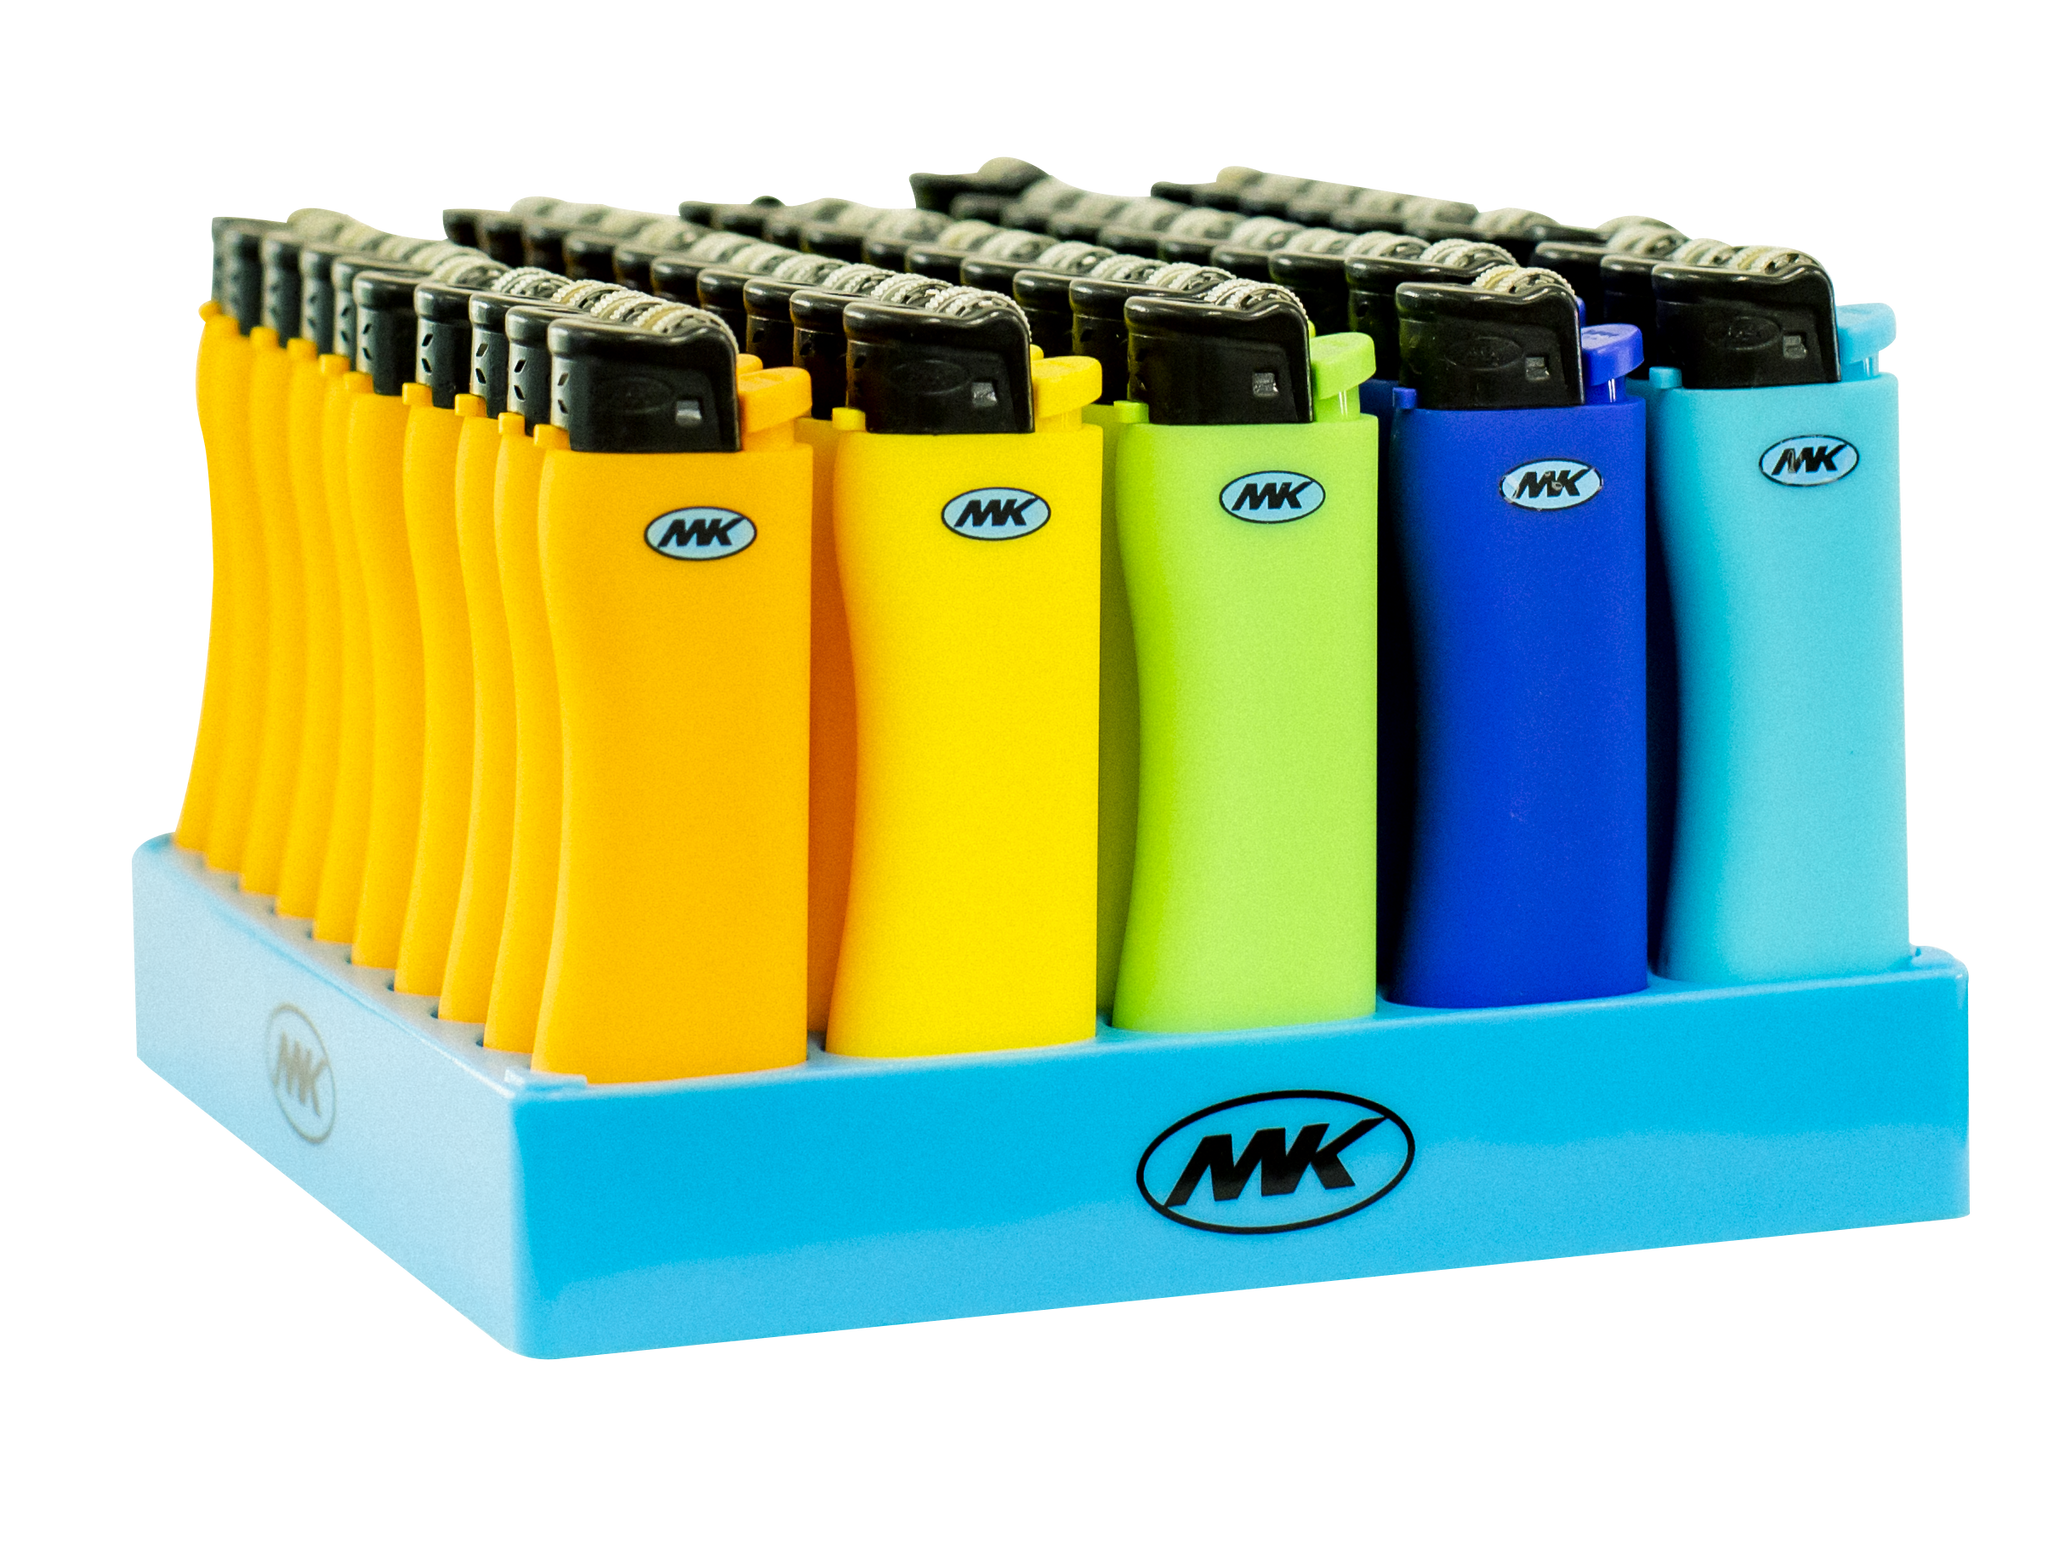 MK Slip Guard Assorted Color Premium Refillable Lighter - 50ct Display (MSRP: $1.99ea)